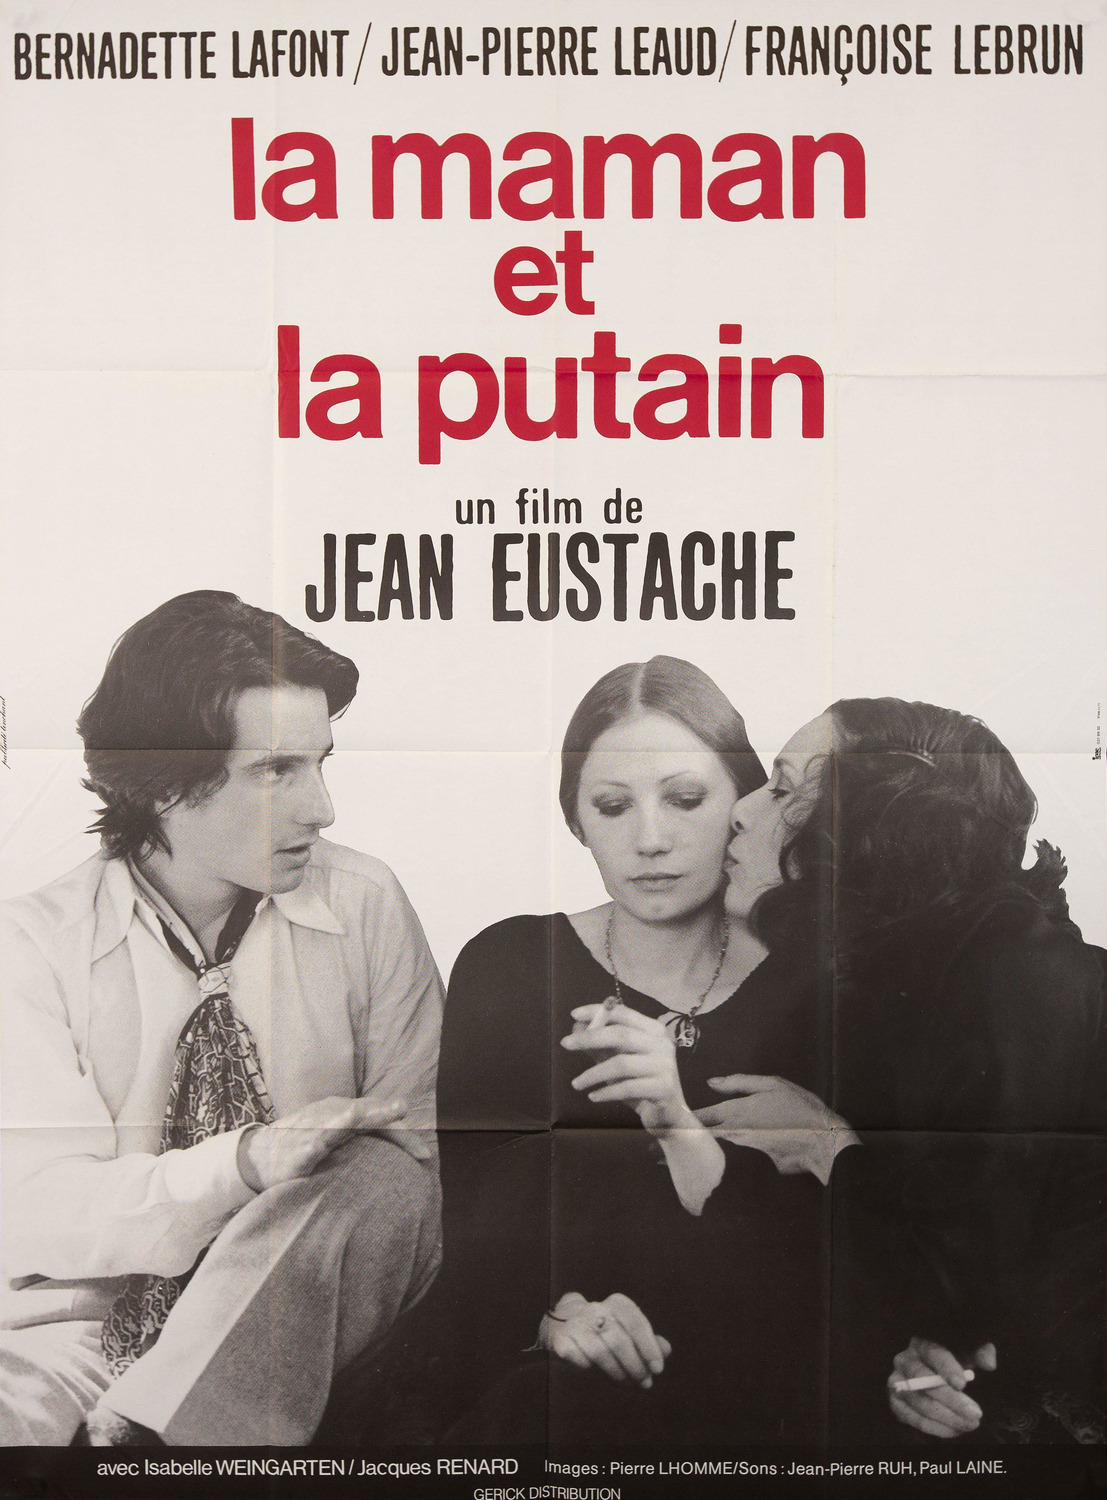 Extra Large Movie Poster Image for La maman et la putain (#1 of 2)